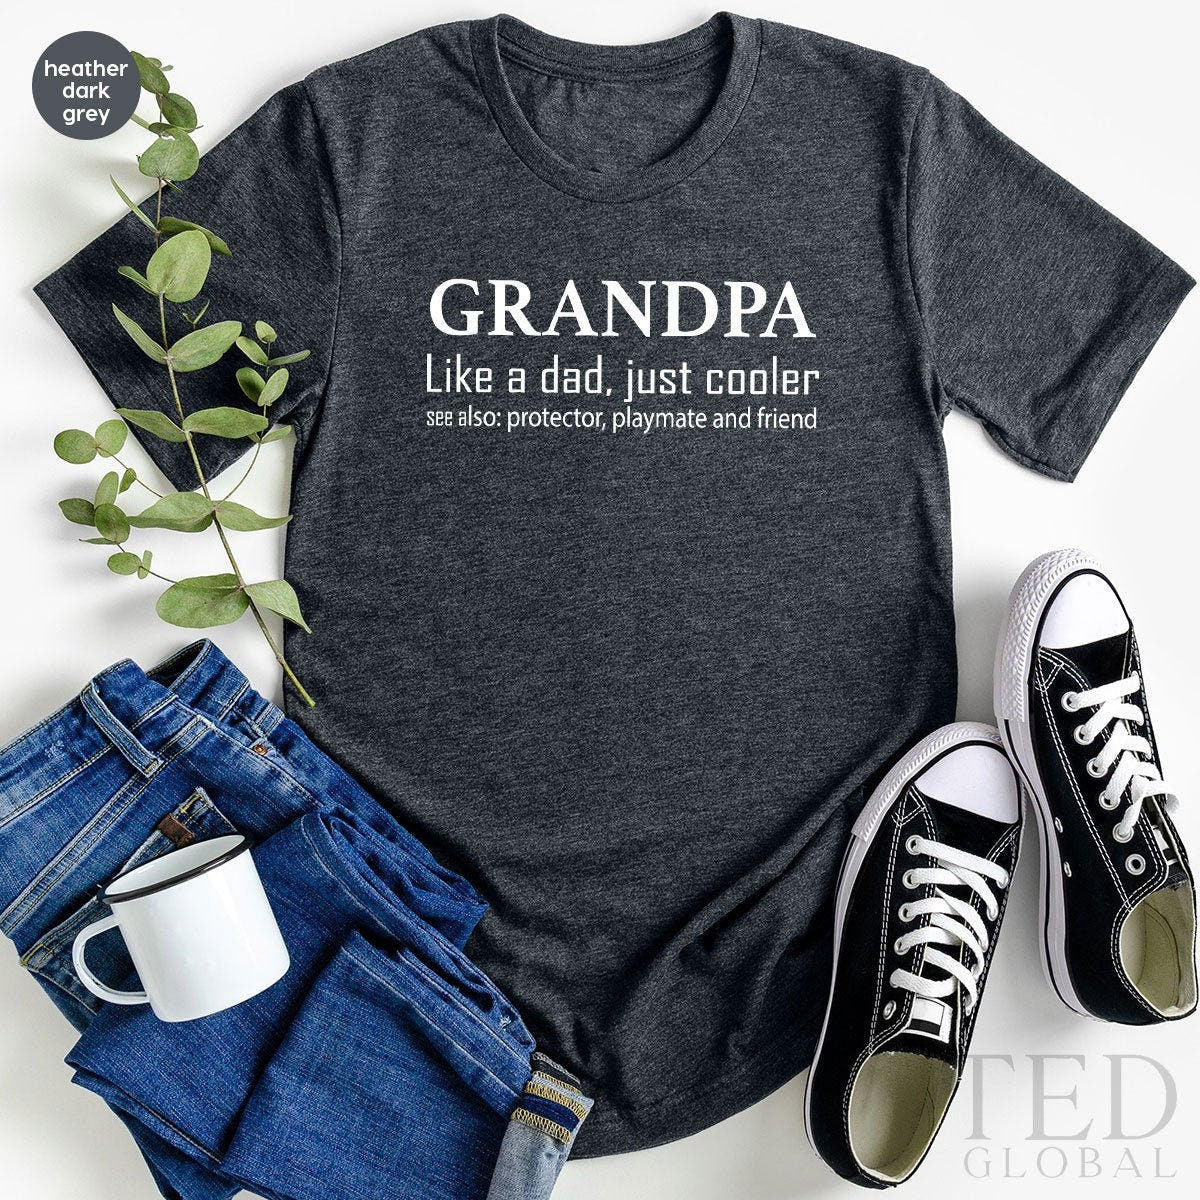 Grandpa Shirt, Like Dad Just Cooler Shirt, Grandpa Fathers Day Gift, Grandad Shirt, Papa Shirts, Funny Grandpa Shirt, Grandpa Gifts - Fastdeliverytees.com